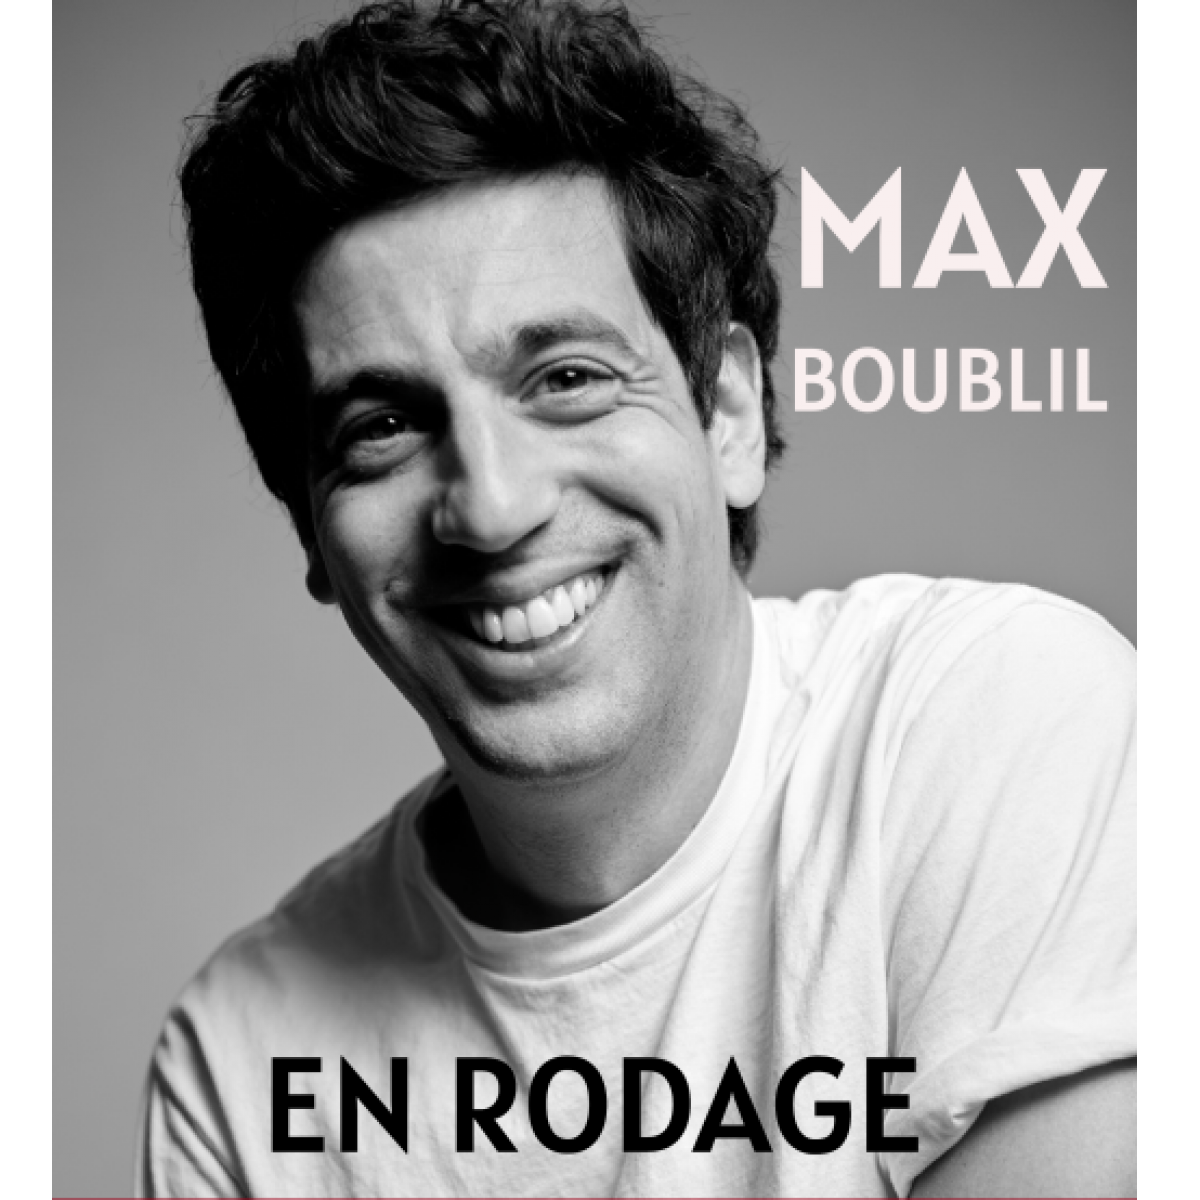 Max Boublil - En rodage